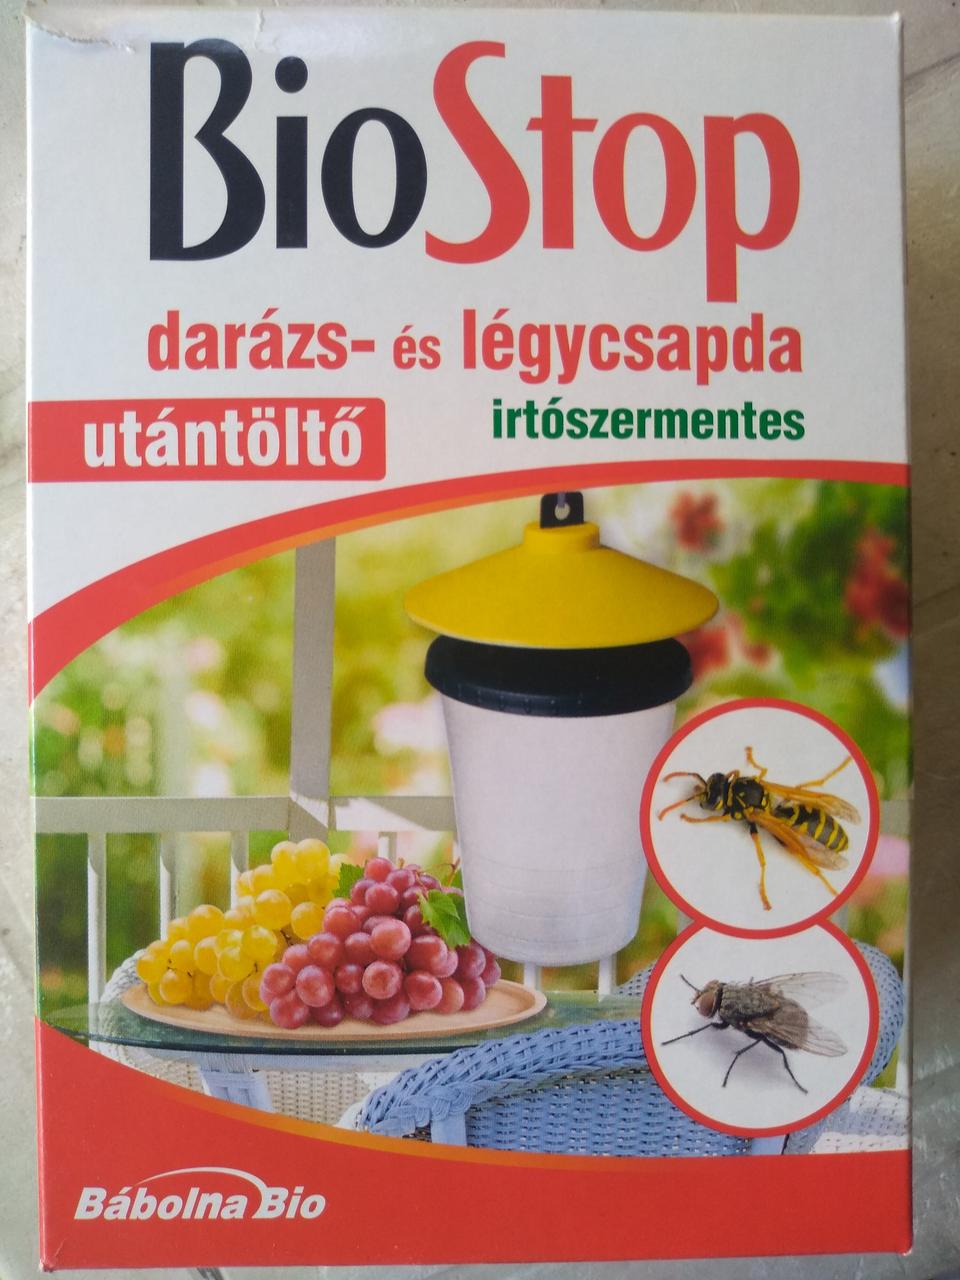 Bio stop - пастка для ос та мух Біостоп